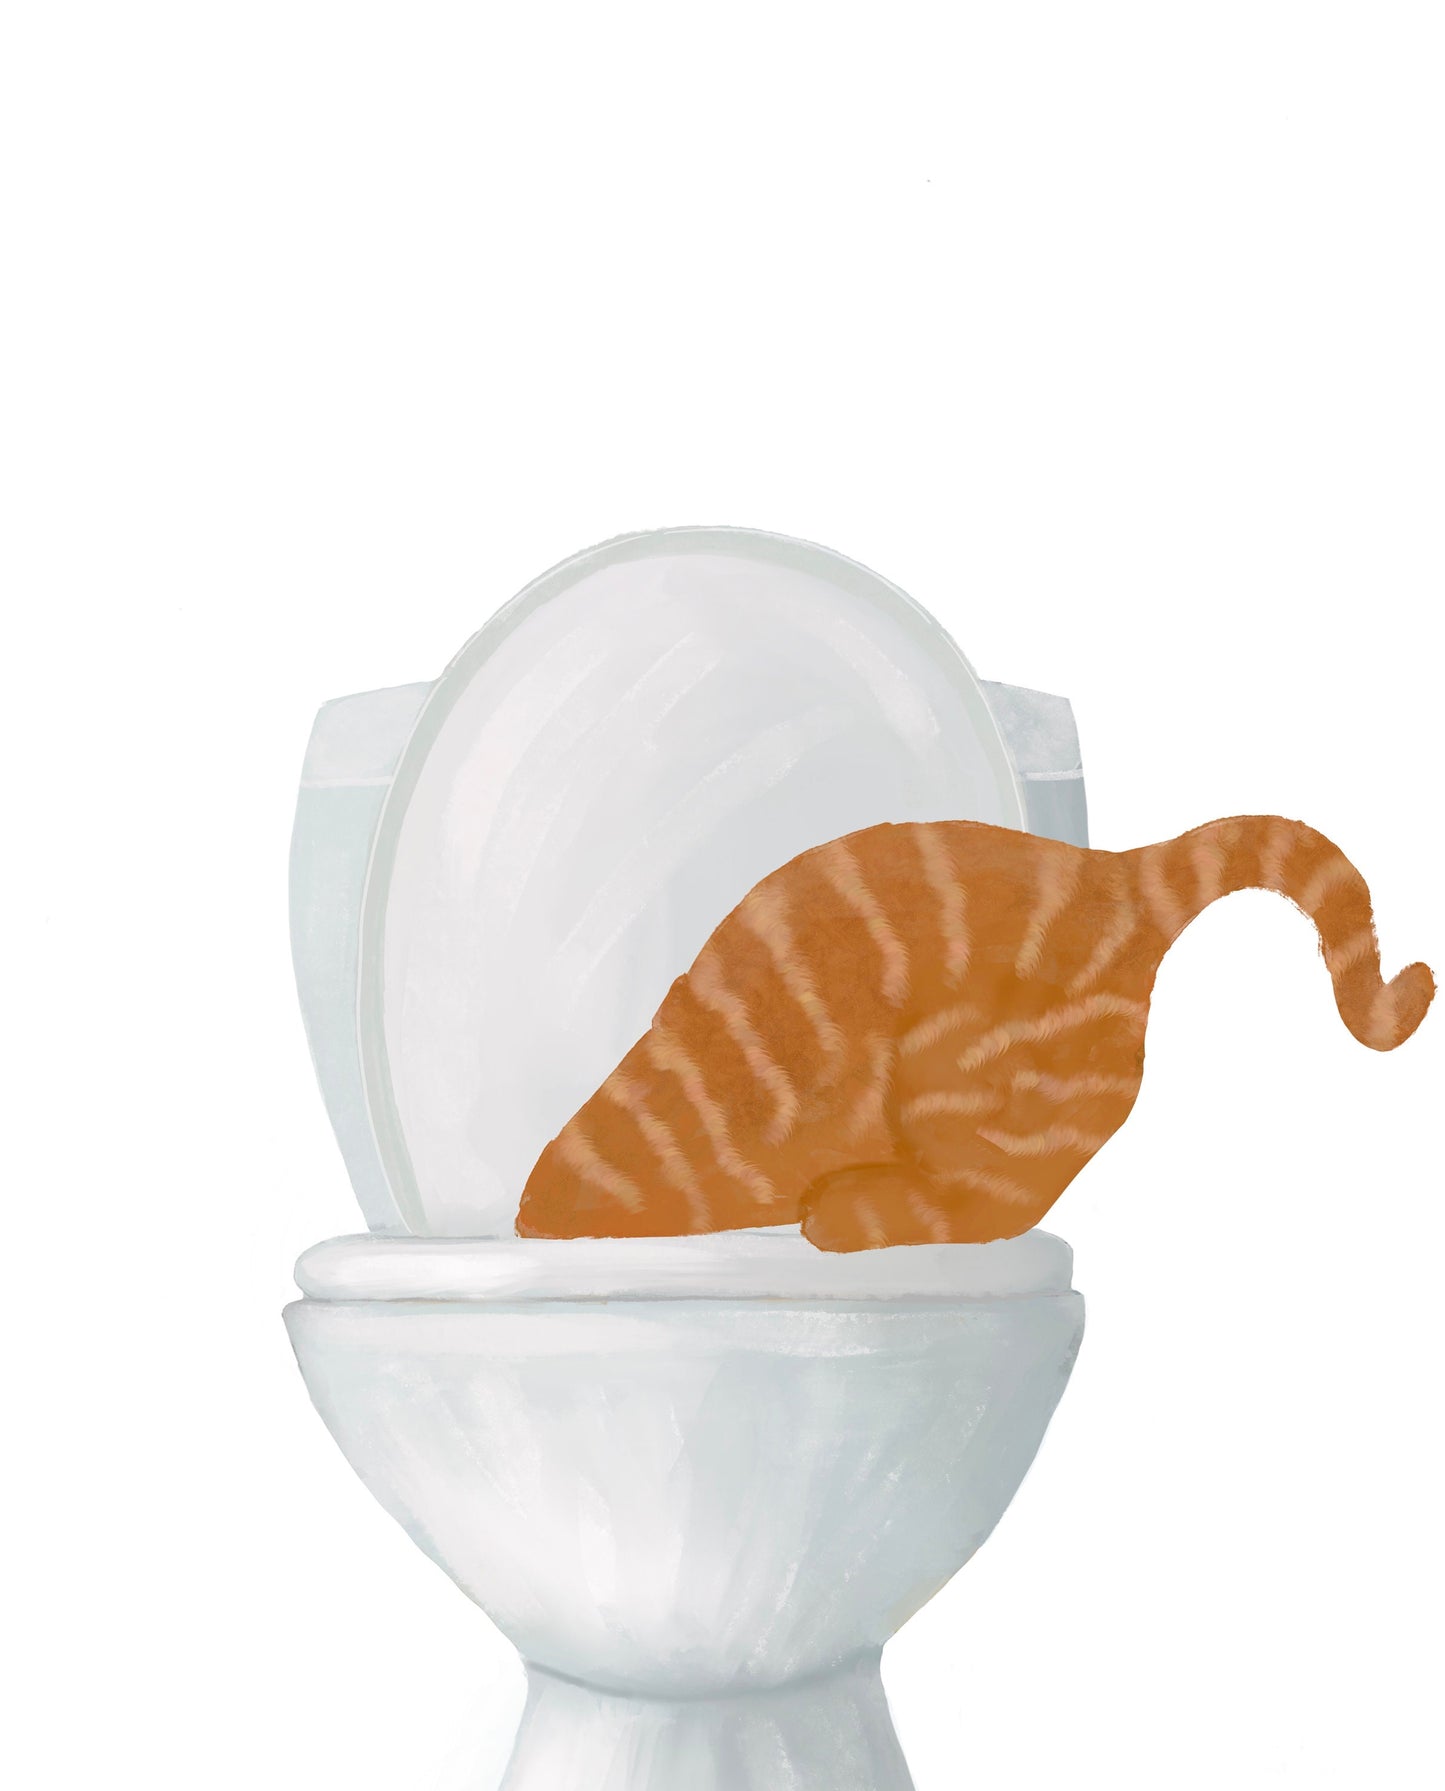 Ginger Cat Drinking Water From Toilet Print, Fat Orange Cat Art, Bathroom Decor, Bathroom Cat Painting, Kitty Licking Water From Toilet Art